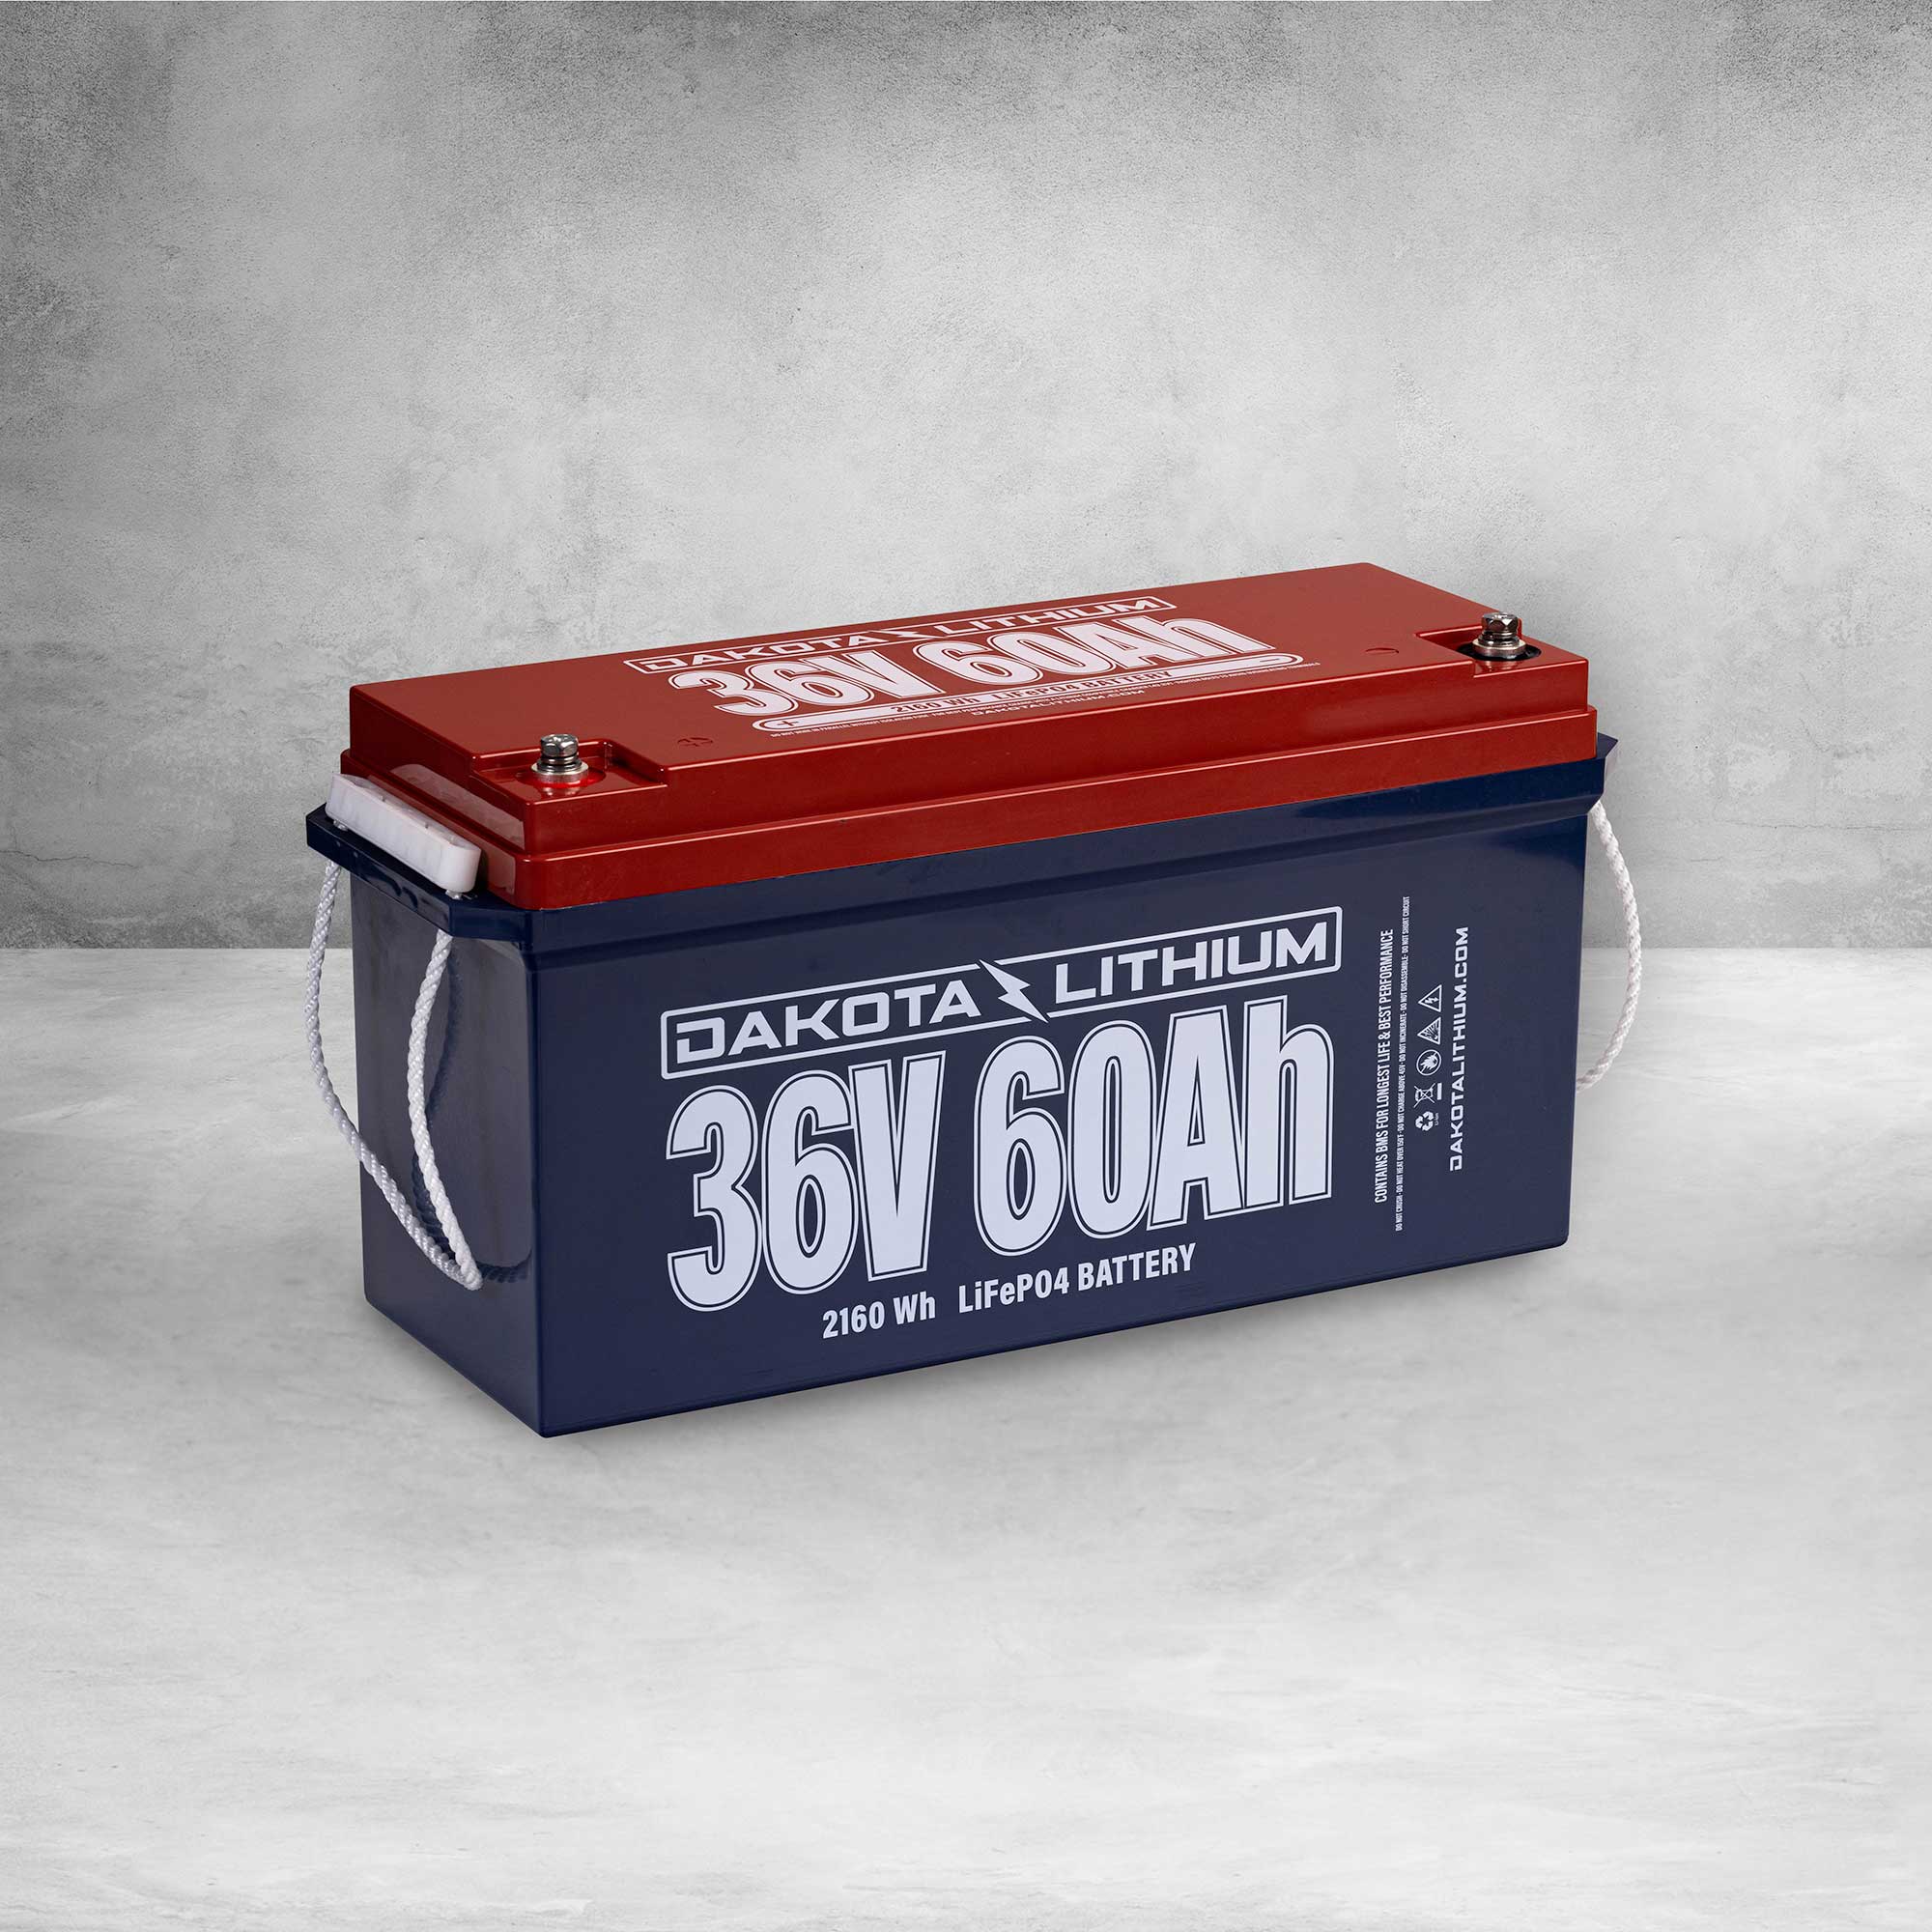 Dakota Lithium 24V 60 A-Hr 1440 Wh LifePO4 Battery #BDD24060